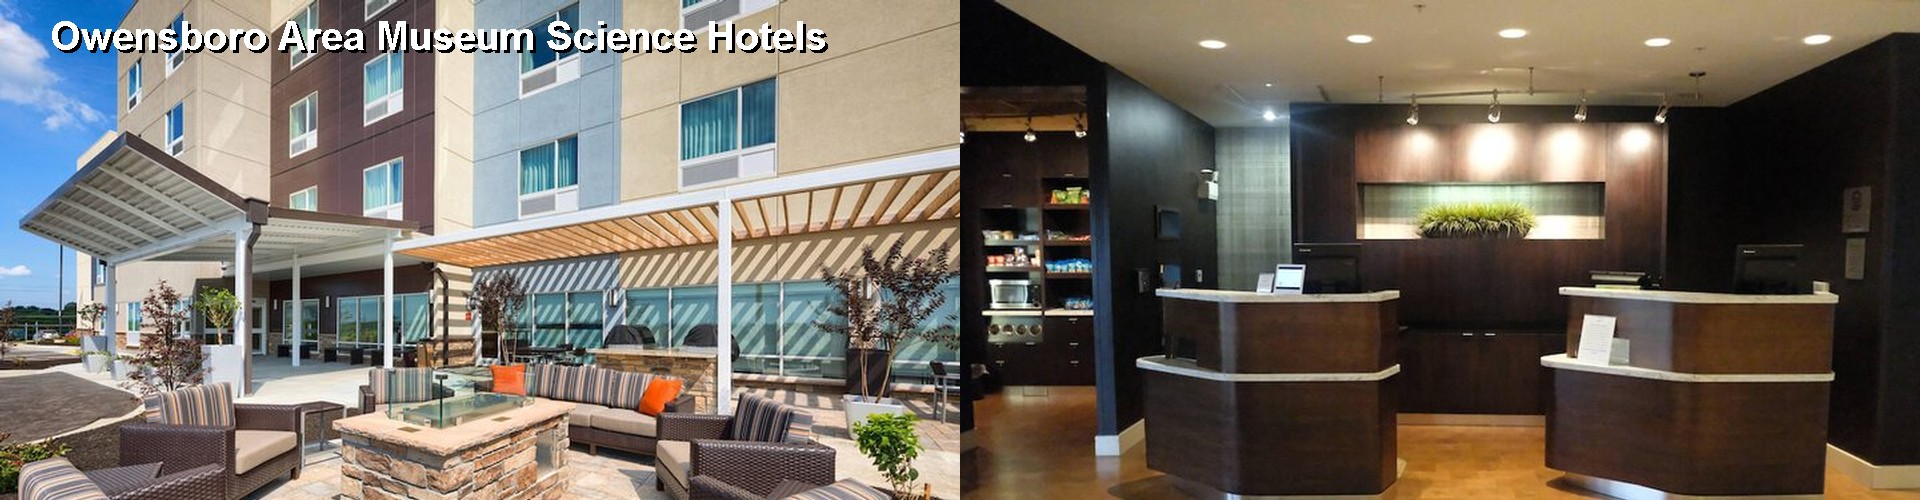 5 Best Hotels near Owensboro Area Museum Science